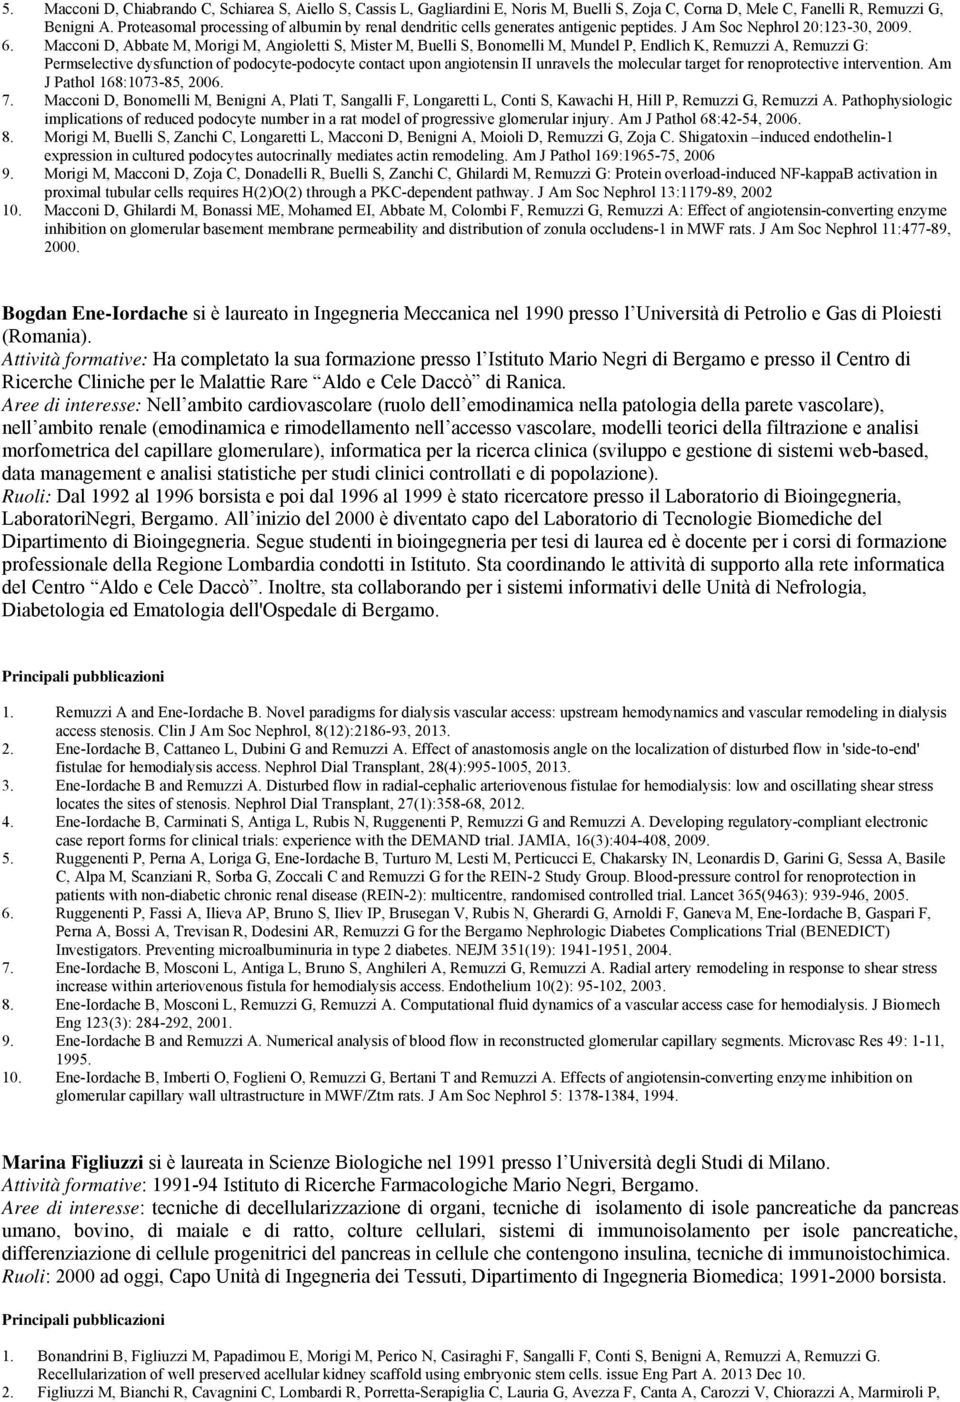 Macconi D, Abbate M, Morigi M, Angioletti S, Mister M, Buelli S, Bonomelli M, Mundel P, Endlich K, Remuzzi A, Remuzzi G: Permselective dysfunction of podocyte-podocyte contact upon angiotensin II